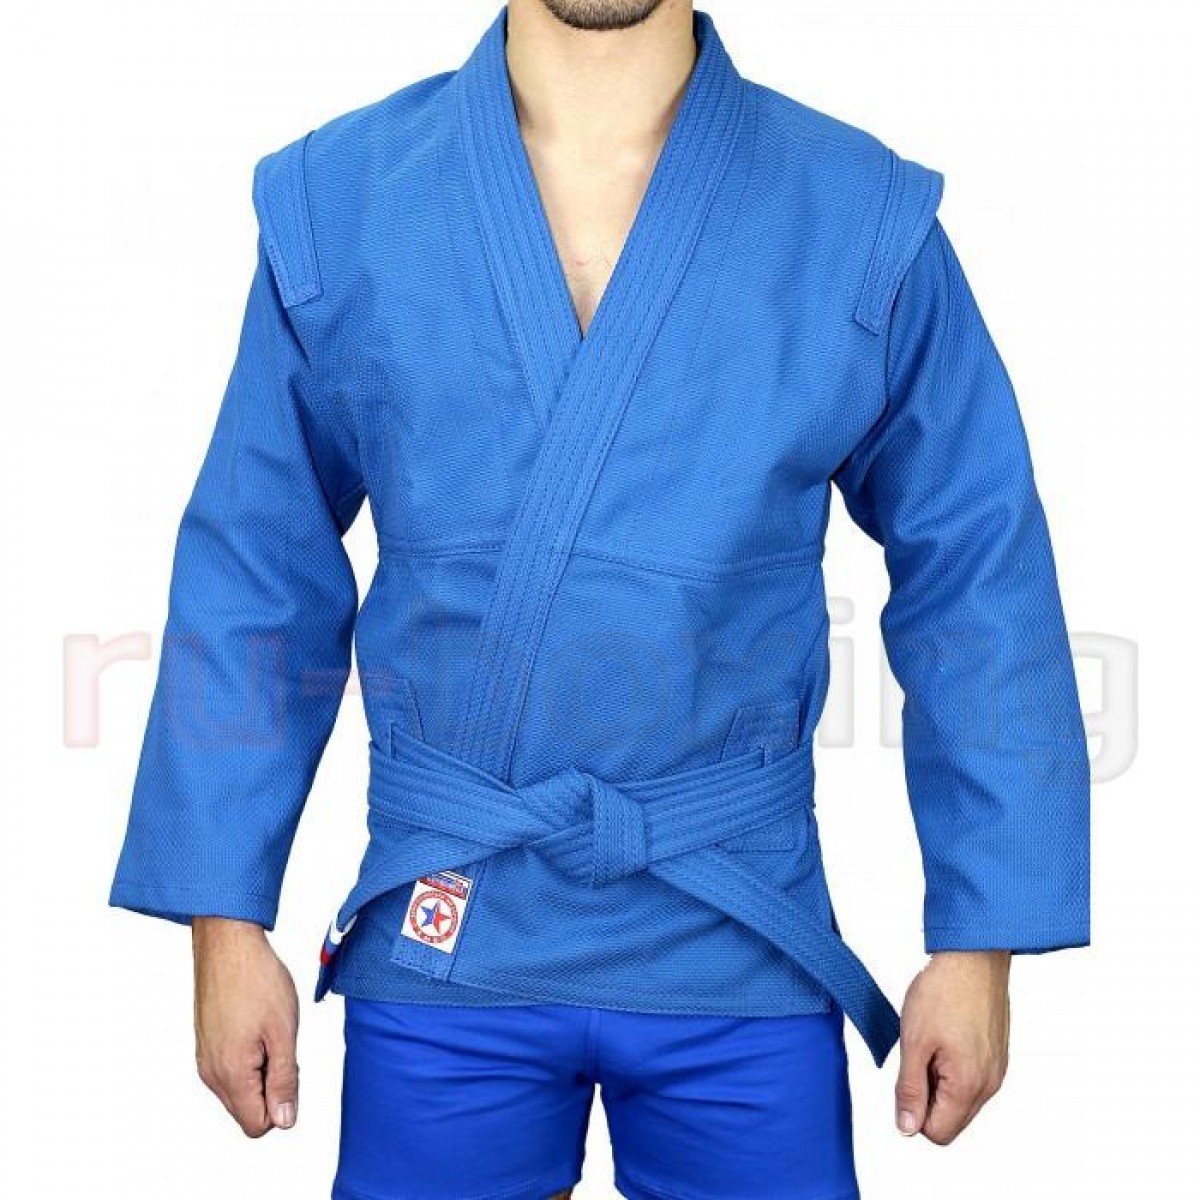 Куртка для самбо Атака размер 52 синяя